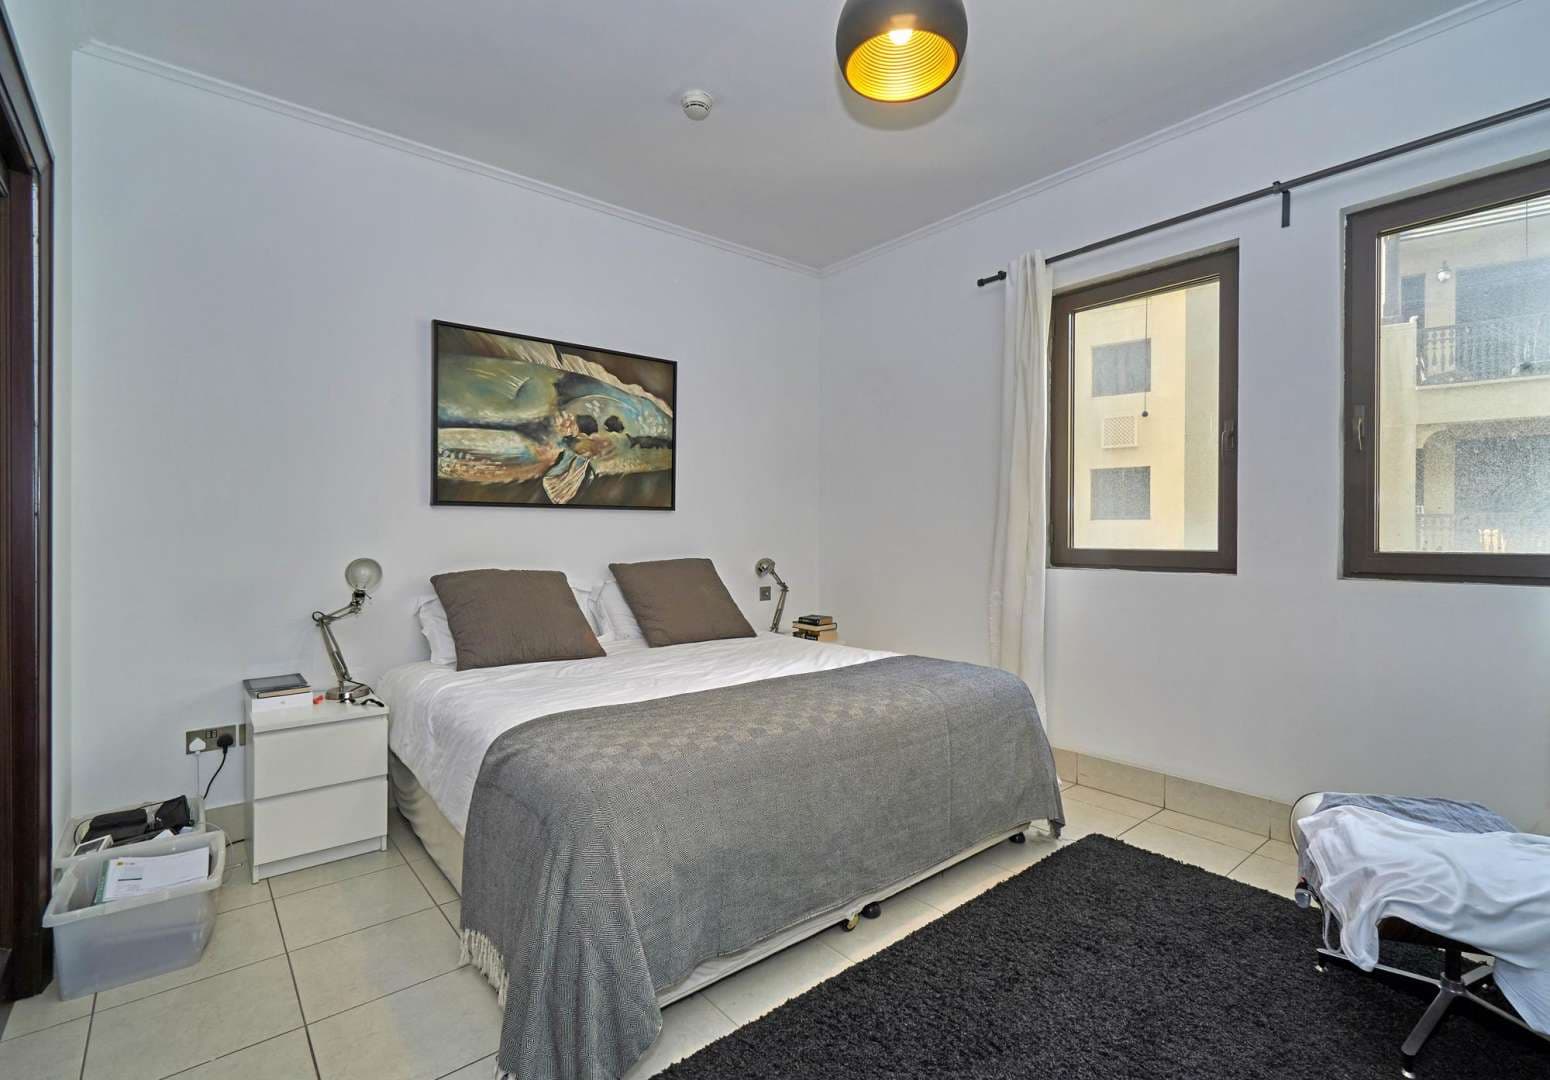 2 Bedroom Apartment For Rent Yansoon Lp05689 4a84edad3658540.jpg